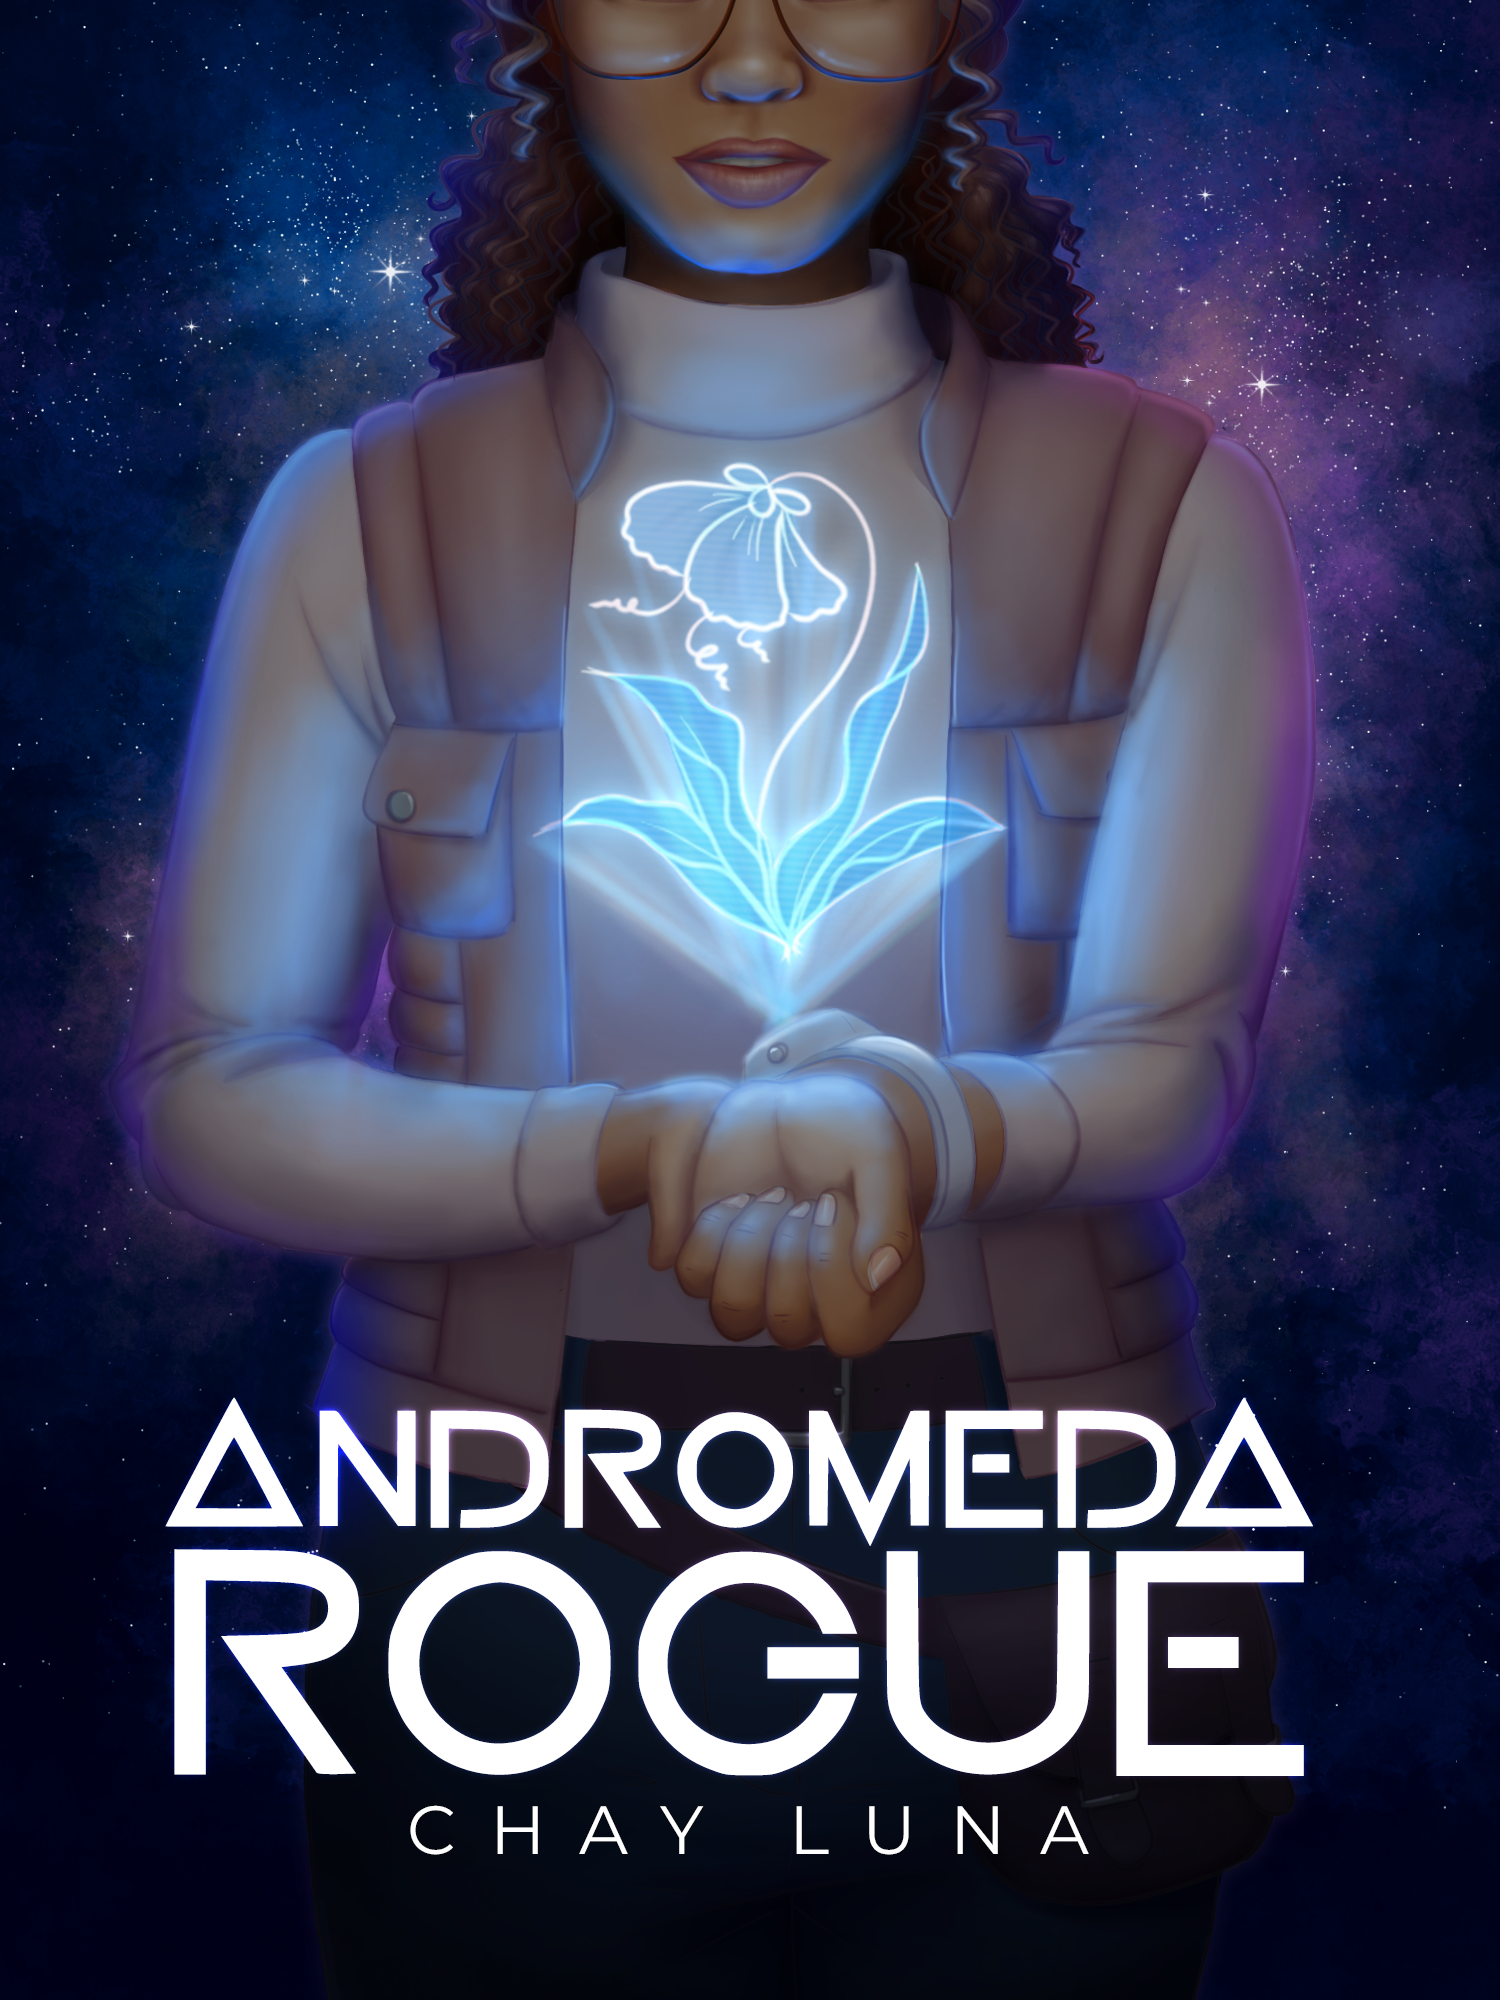 Andromeda Rogue book cover